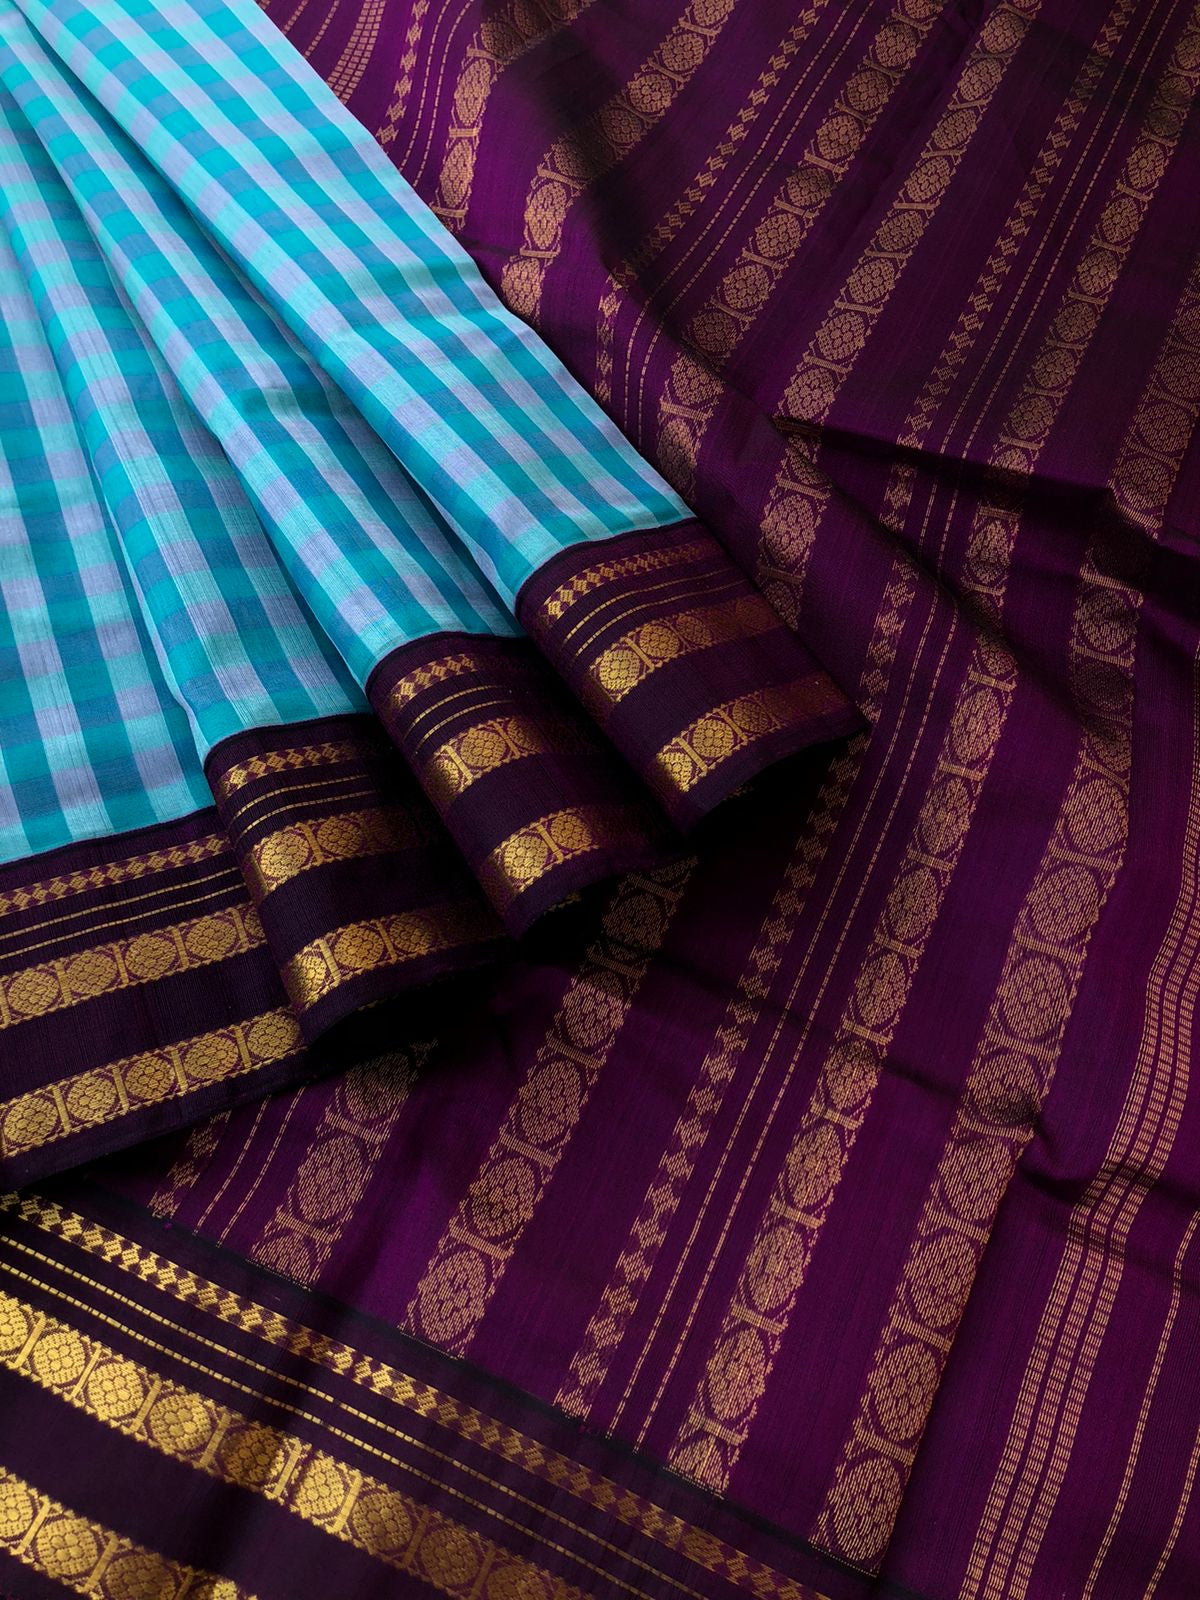 Paalum palamum kattam on Korvai Silk Cotton - turquoise blue and lavender